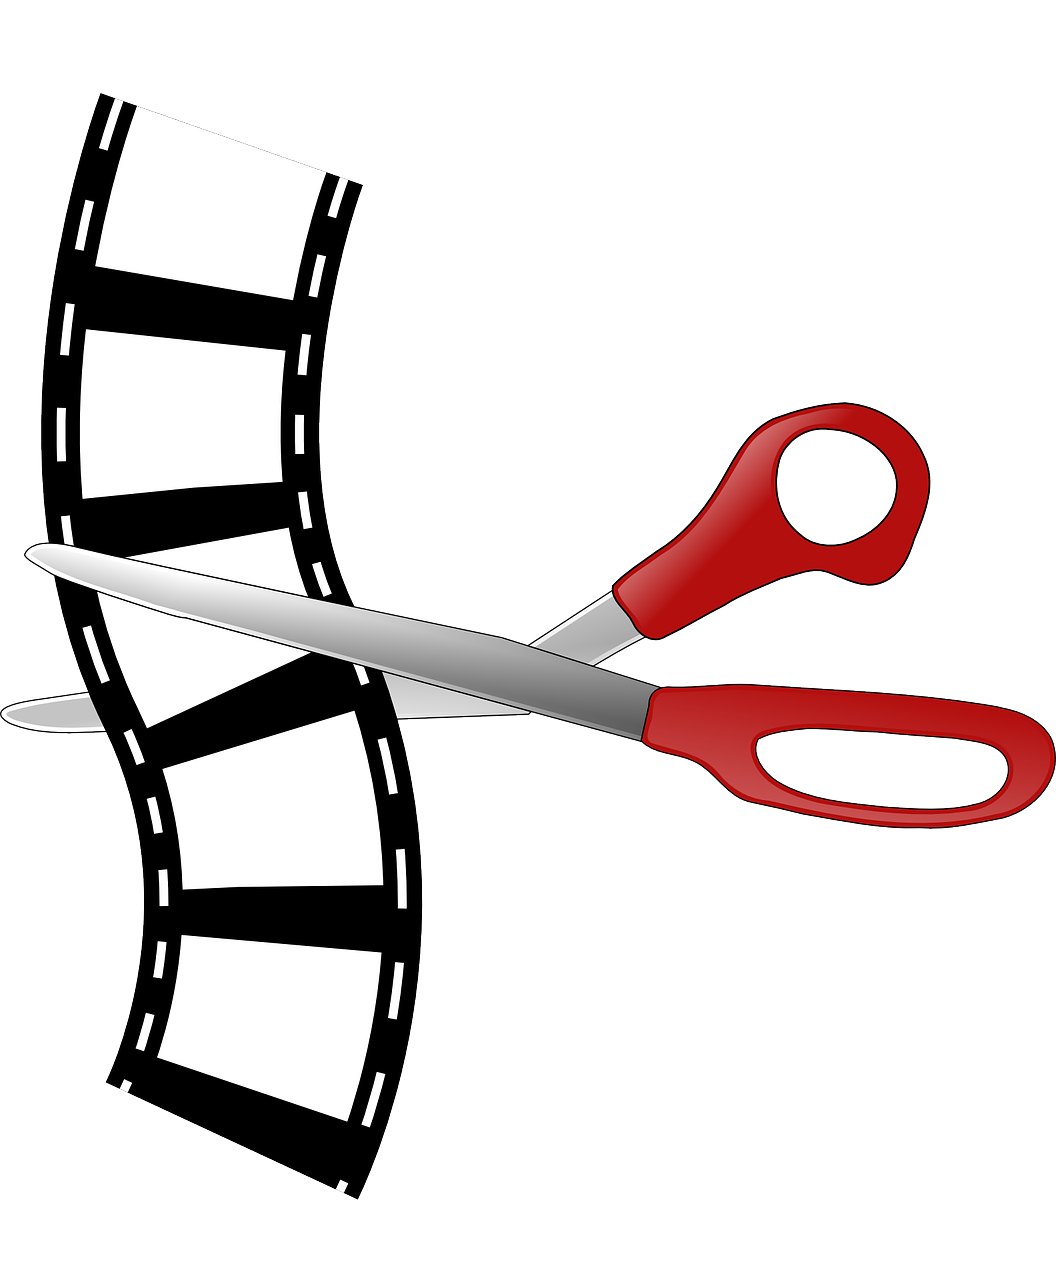 8mm Movie Reels Film On Splicer Ans Scissors Stock Photo